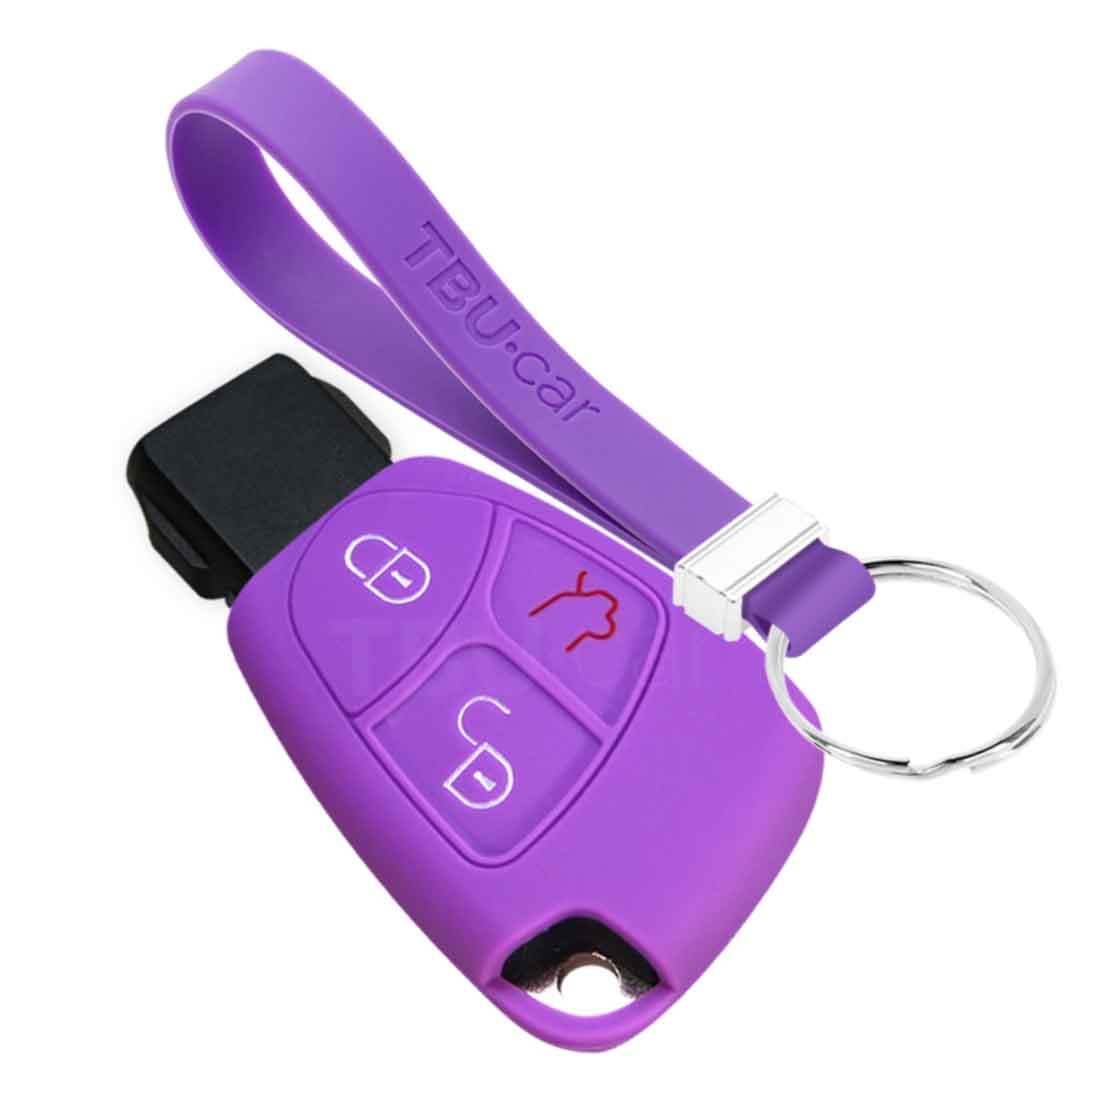 TBU car TBU car Autoschlüssel Hülle kompatibel mit Mercedes 3 Tasten - Schutzhülle aus Silikon - Auto Schlüsselhülle Cover in Violett